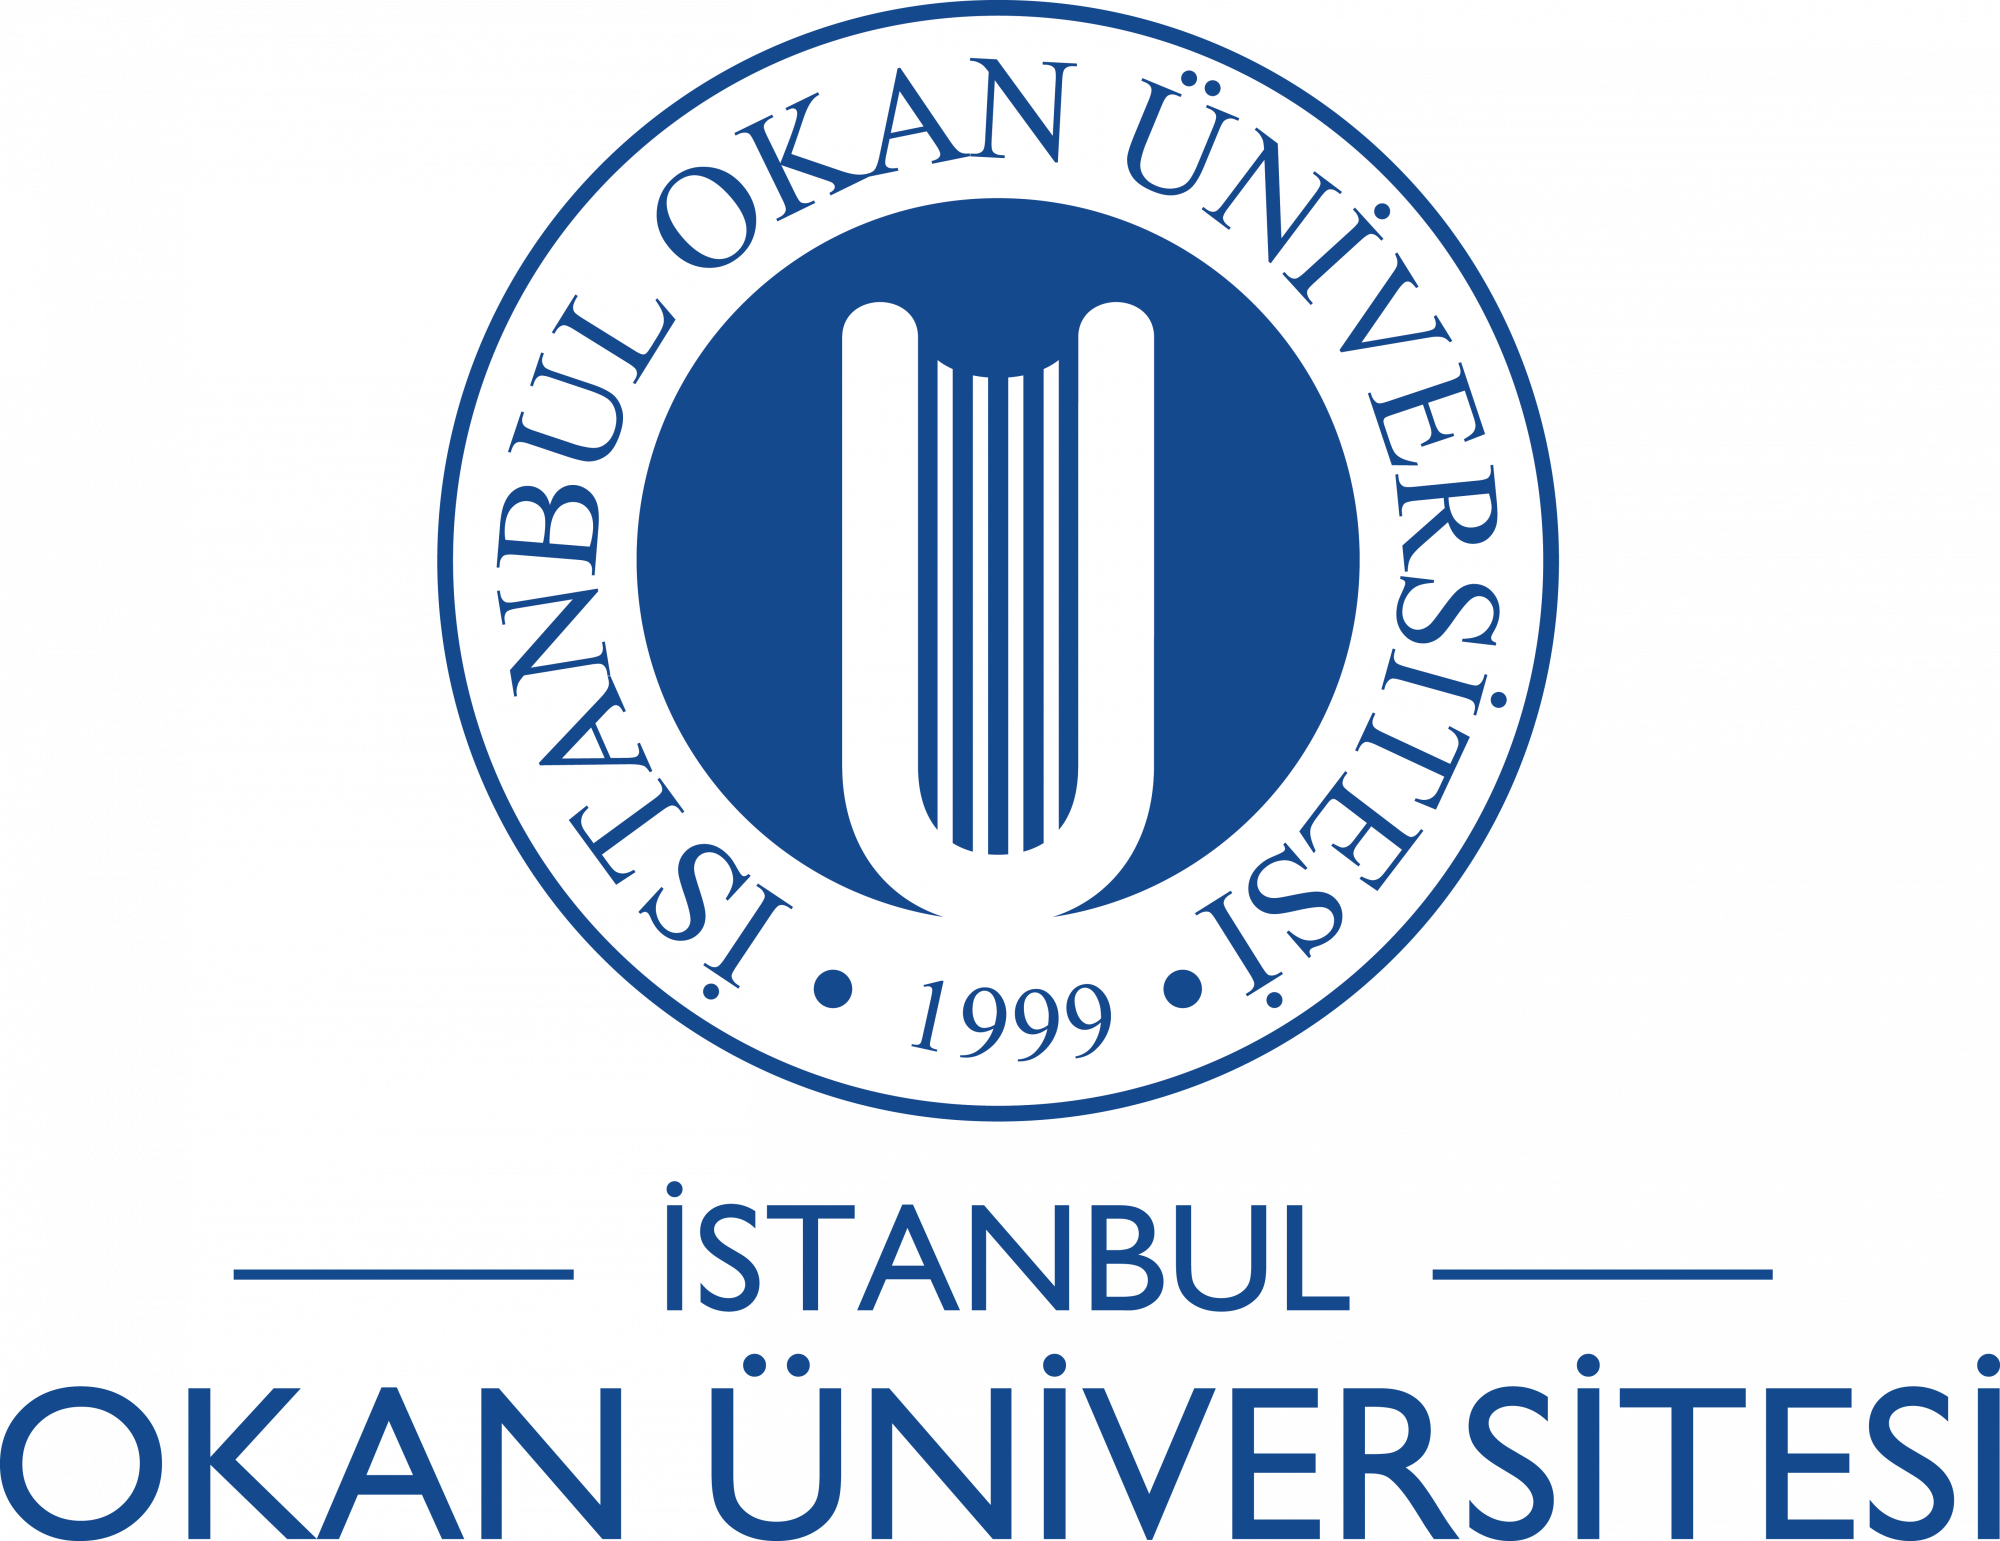 İstanbul Okan Üniversitesi tyrth